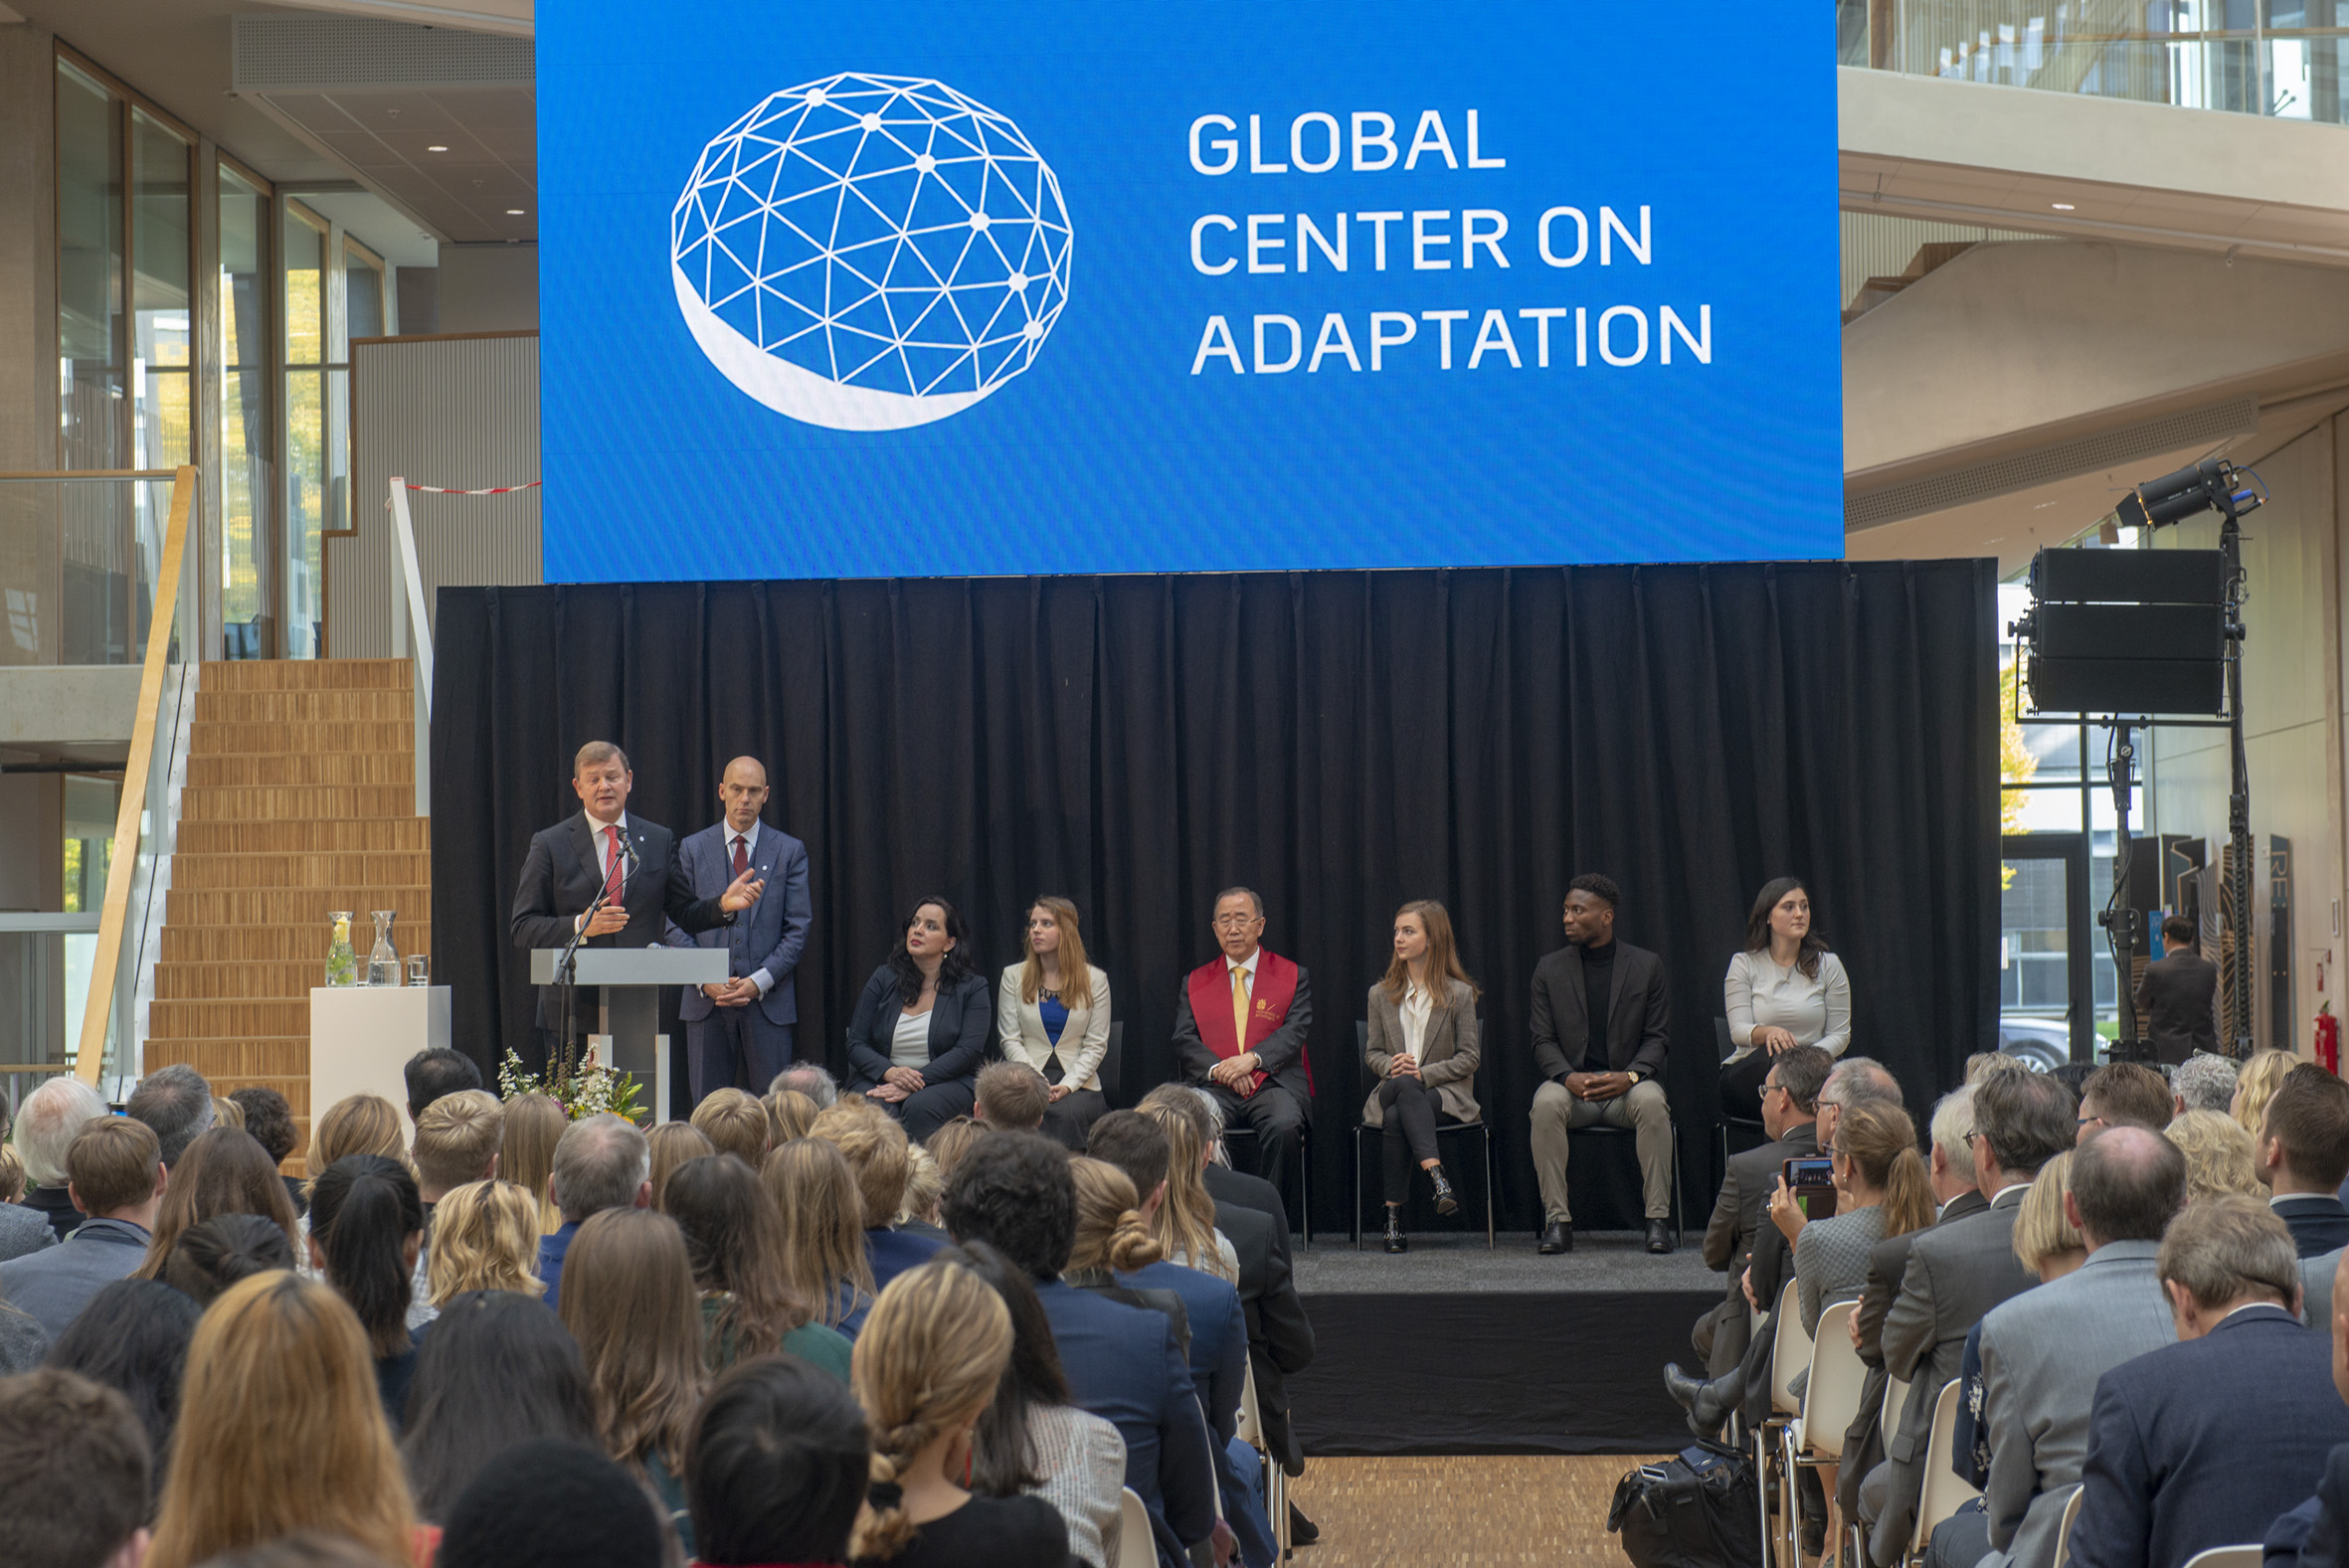 8e secretaris-generaal van de VN Ban Ki-moon opent vestiging Global Center on Adaptation in Groningen8th Secretary-General of the UN Ban Ki-moon opens Global Center on Adaptation Office in Groningen